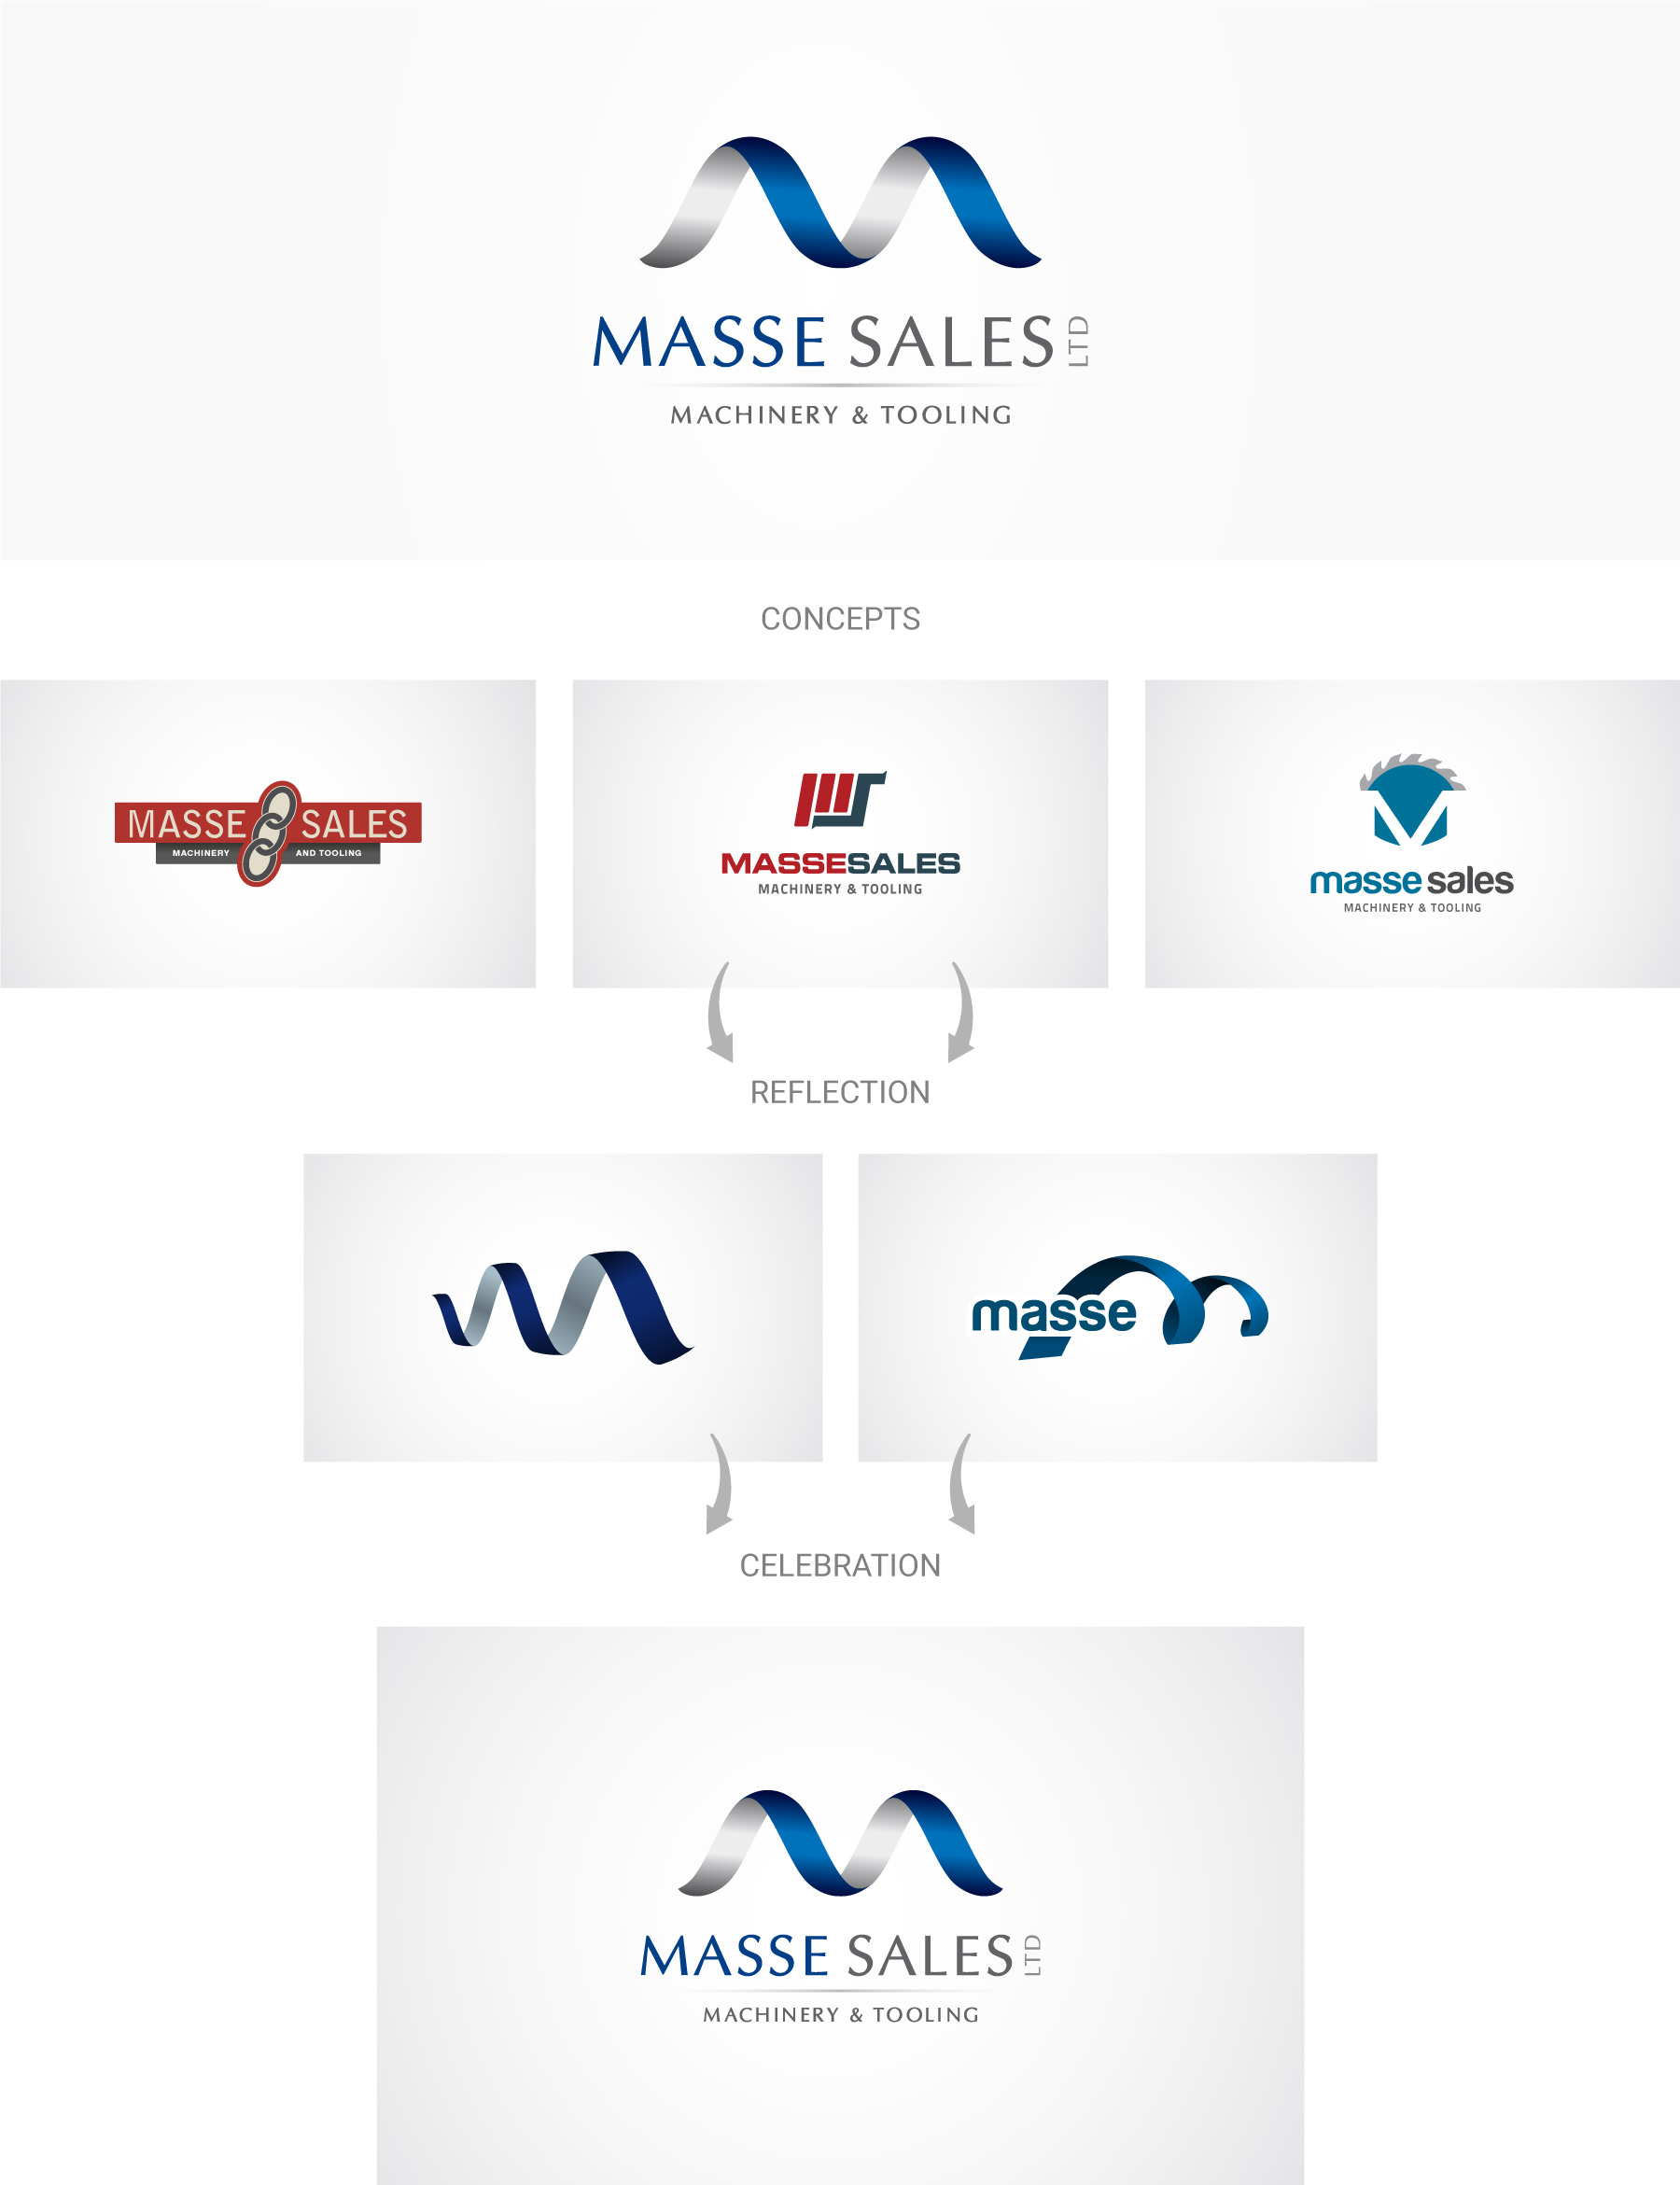 Masse-sales-ltd-logo-design